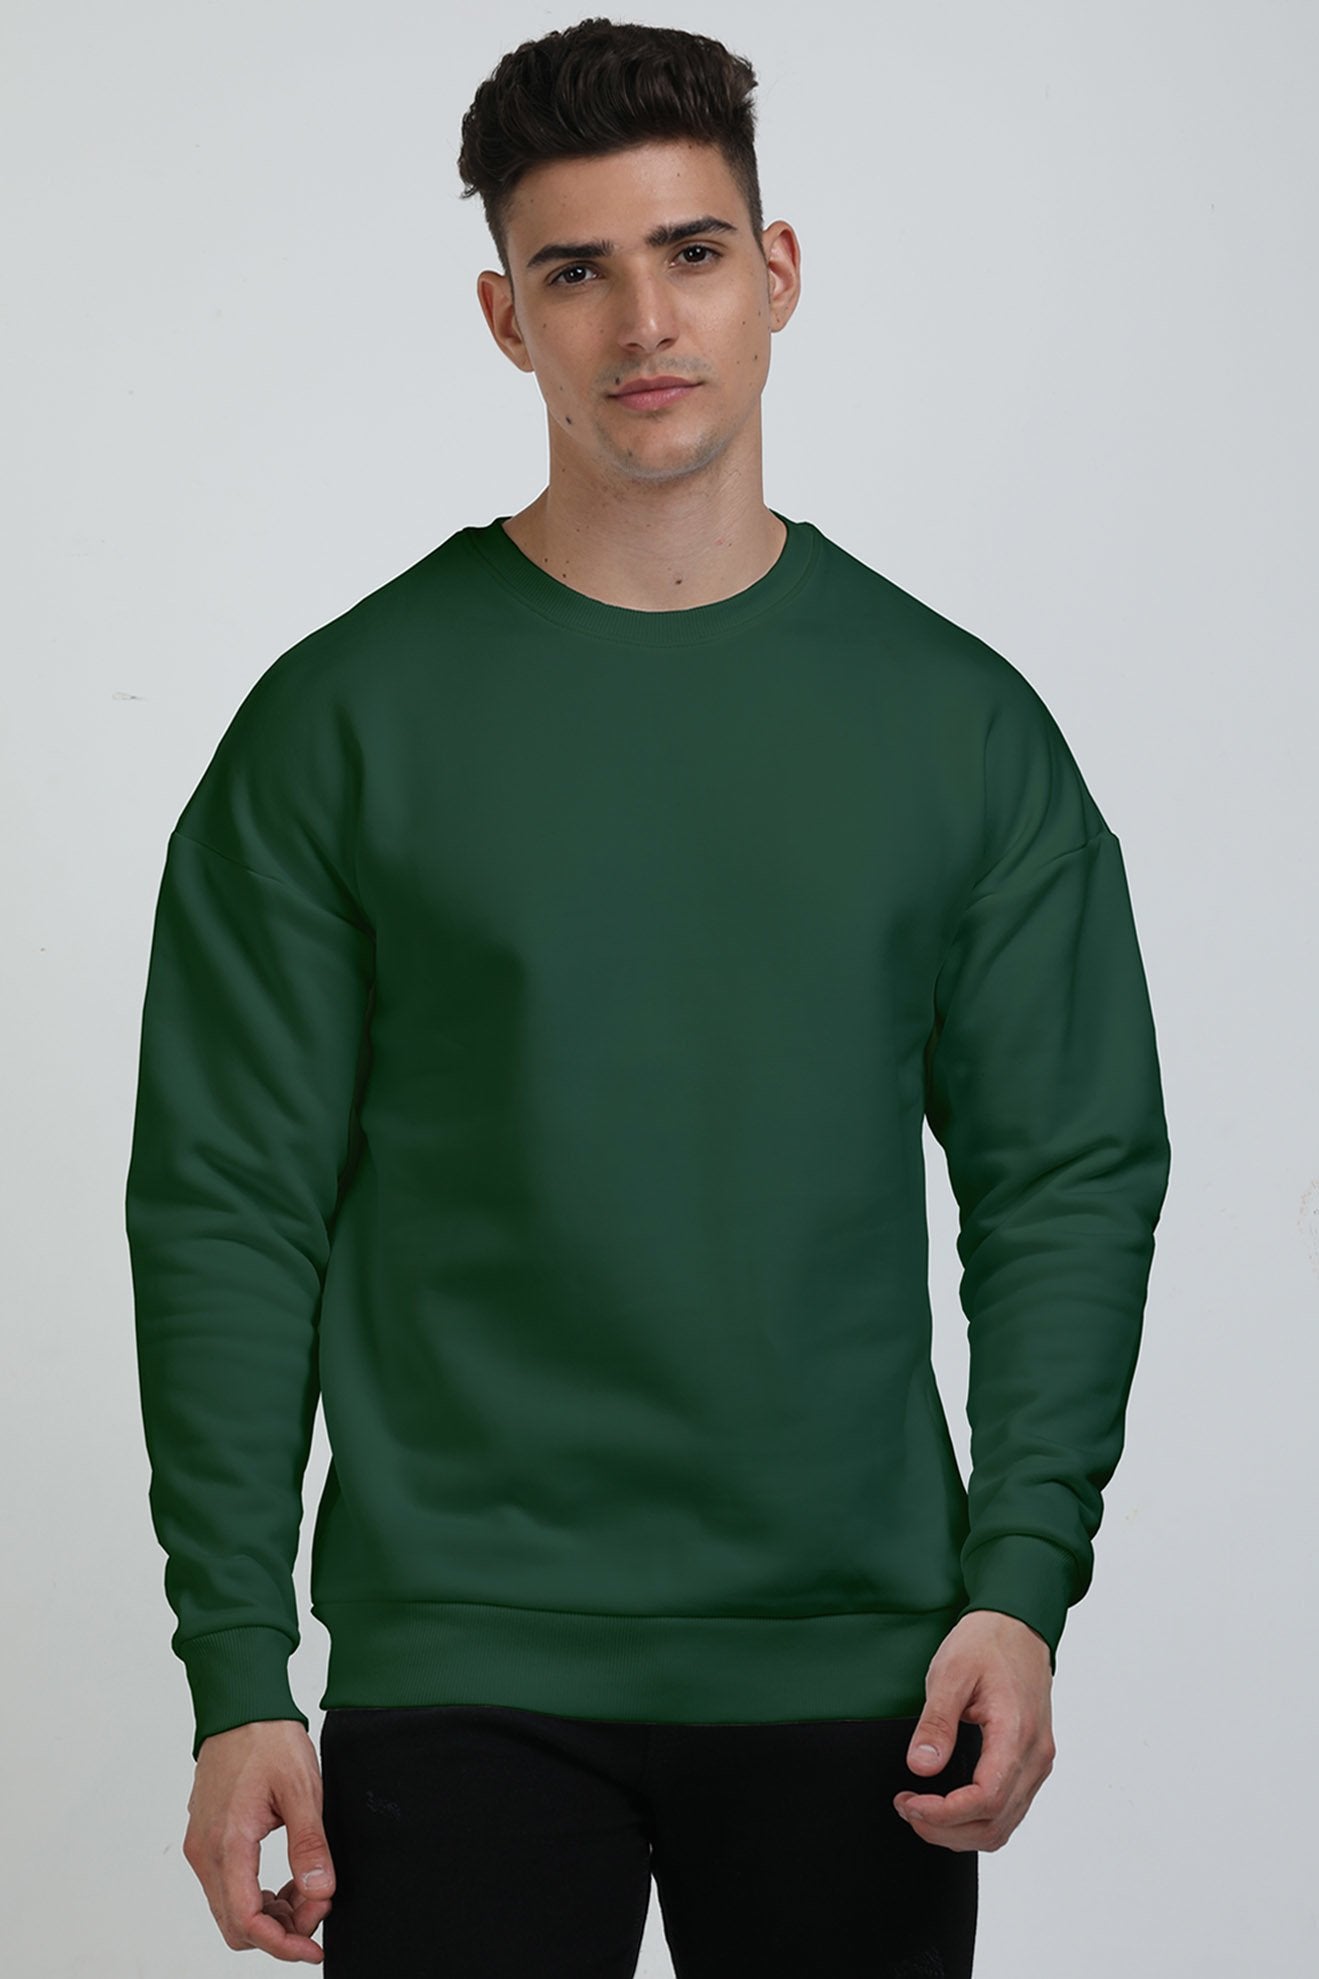 Unisex Oversized Sweatshirts - THE MINIES